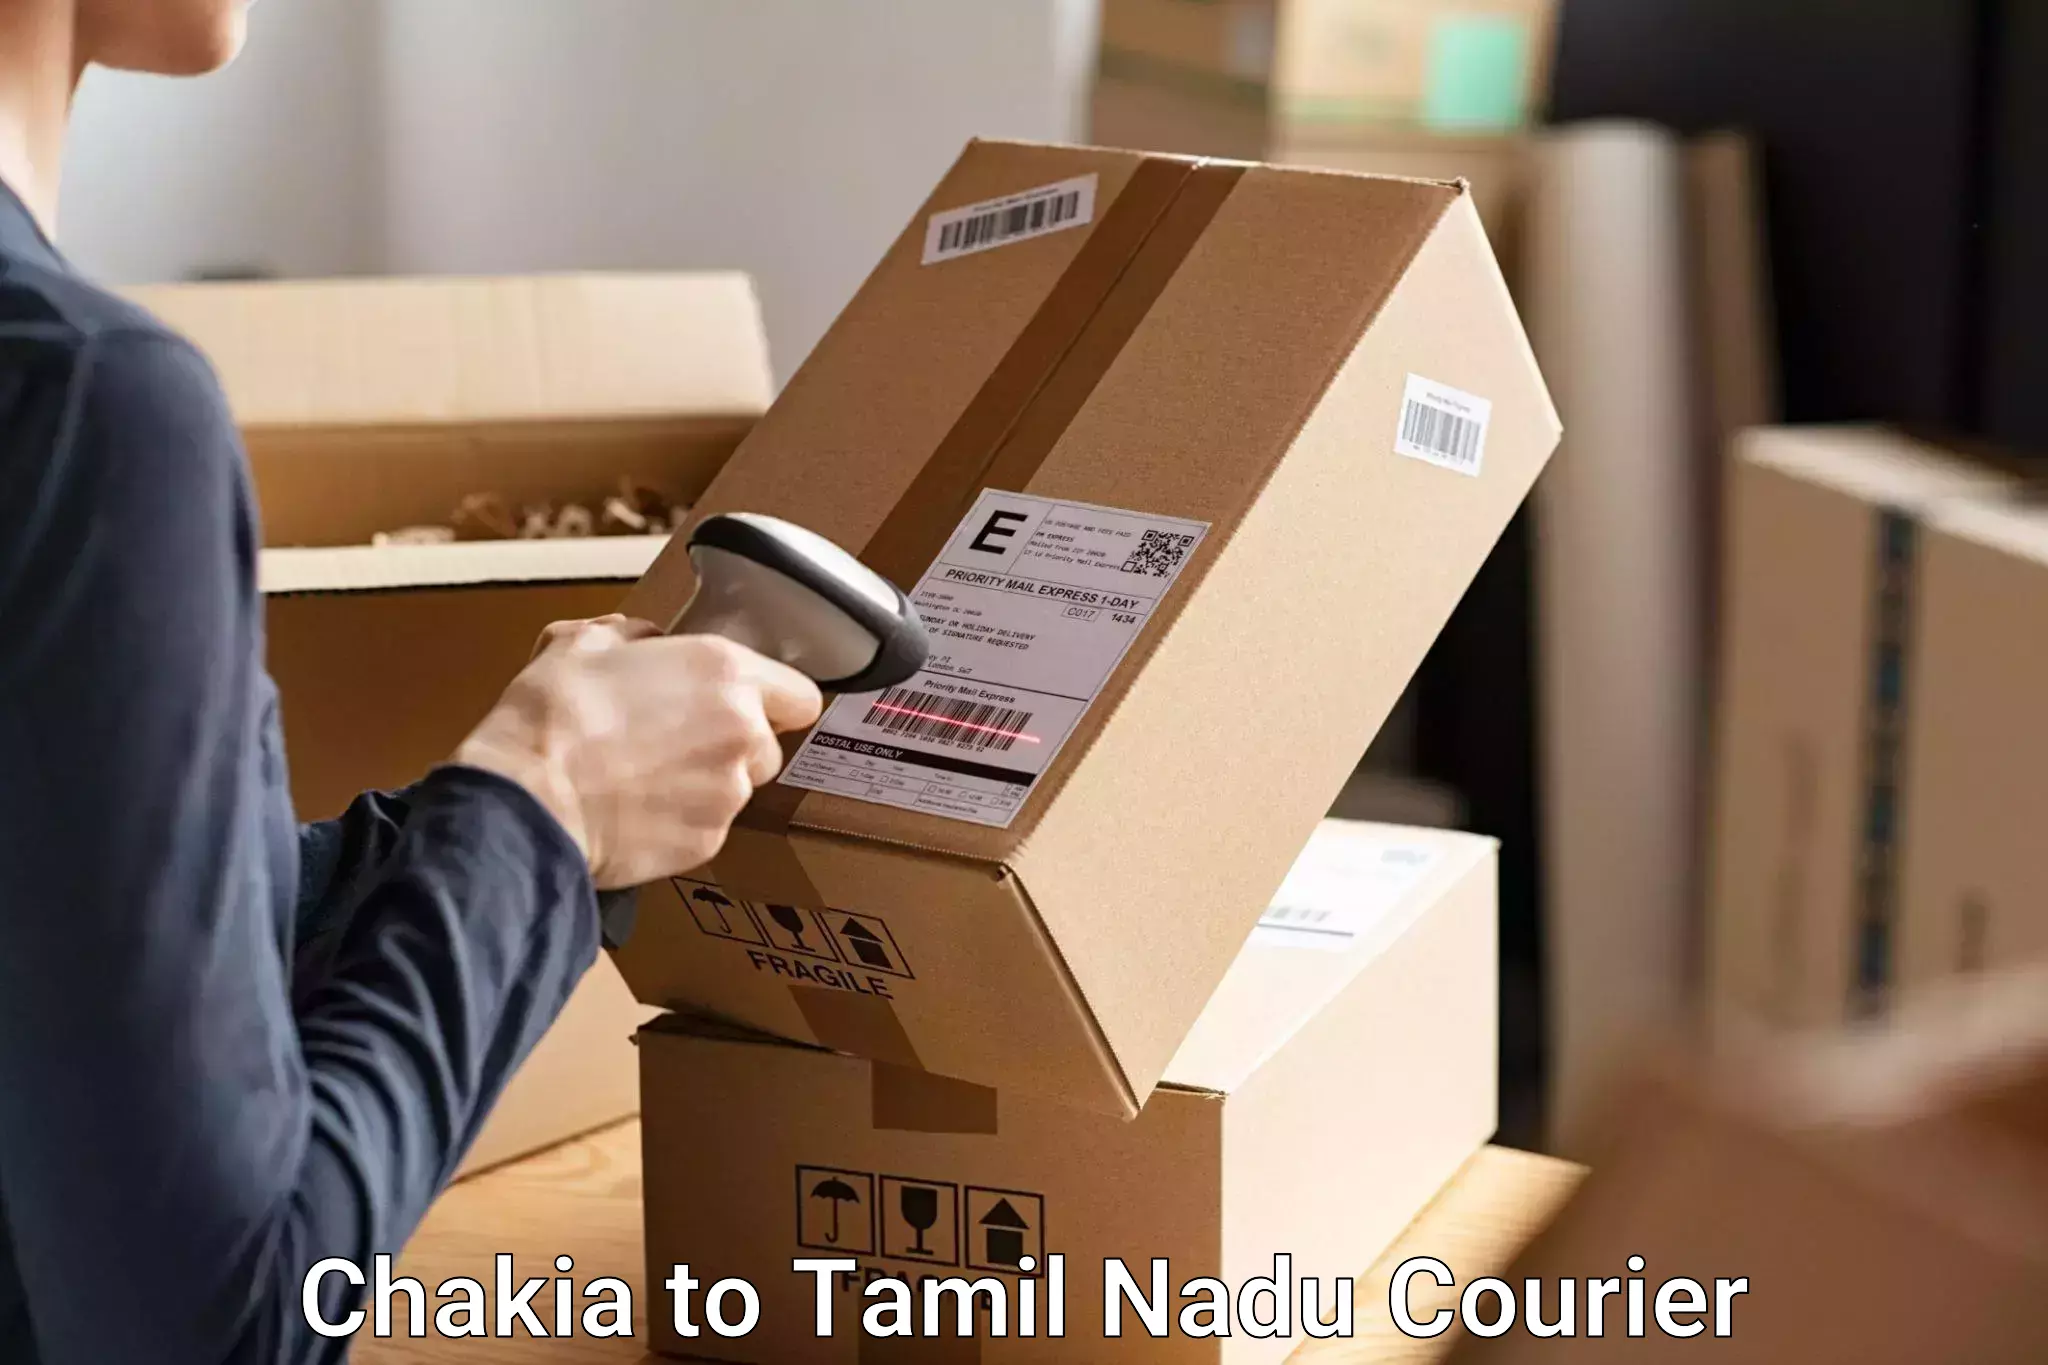 Baggage relocation service Chakia to Tamil Nadu